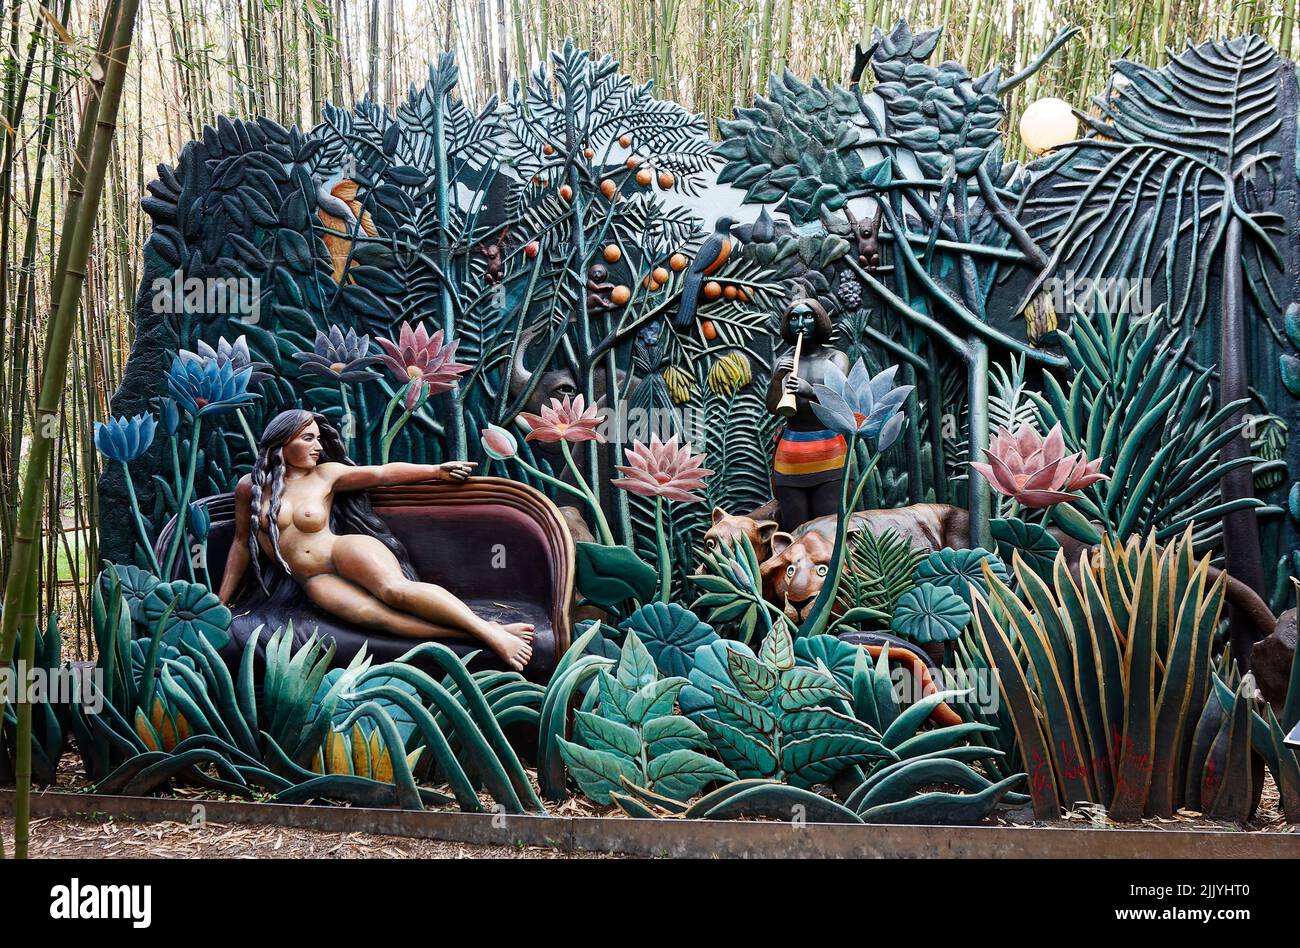 Erotica Tropicallis; large sculpture, nude woman on sofa, jungle scene, bamboo beyond, by Seward Johnson; Grounds for Sculpture; Seward Johnson Center Stock Photo